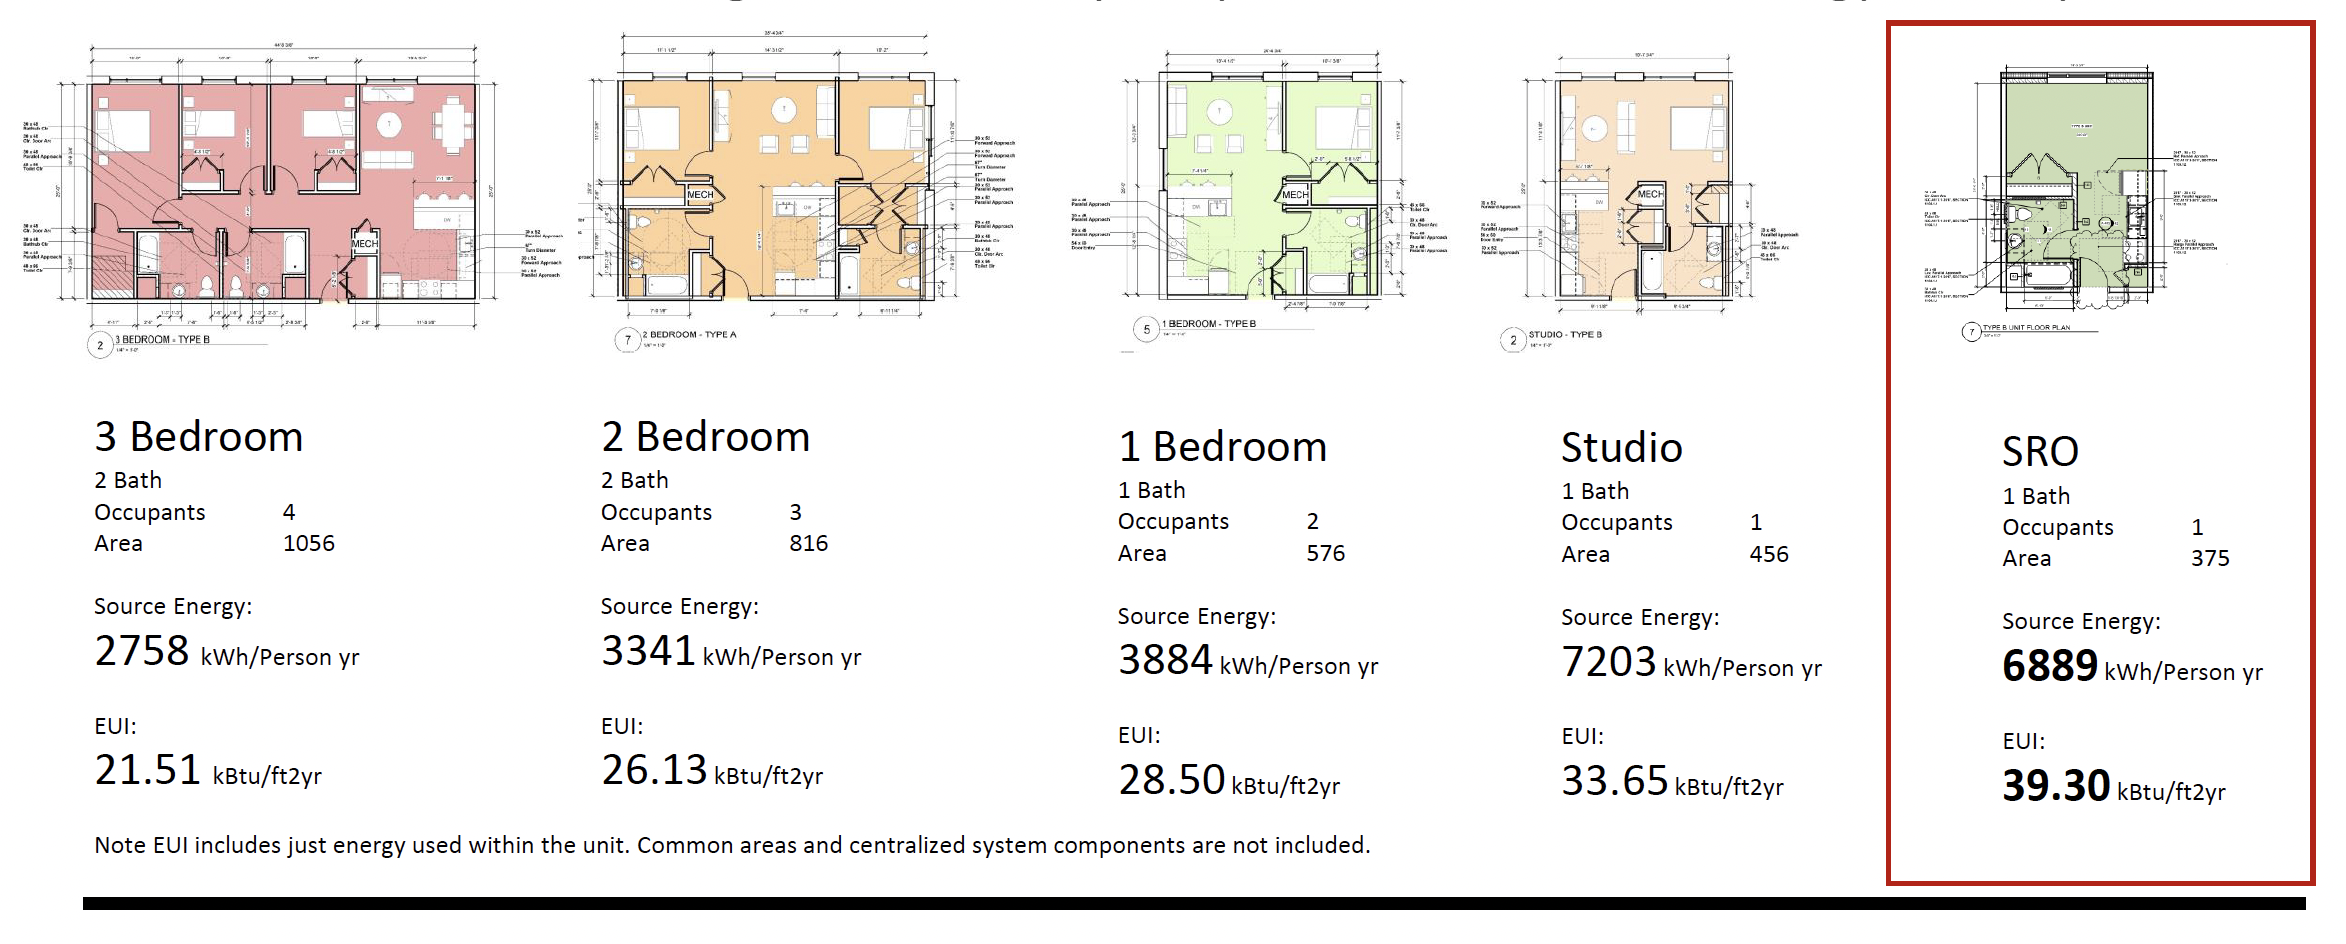 Unit Size Matters: Single Room Occupancy vs Multi-Bedroom energy Density. (Image credit to HED, Interfaith Housing Development Corporation, Boeman Design)